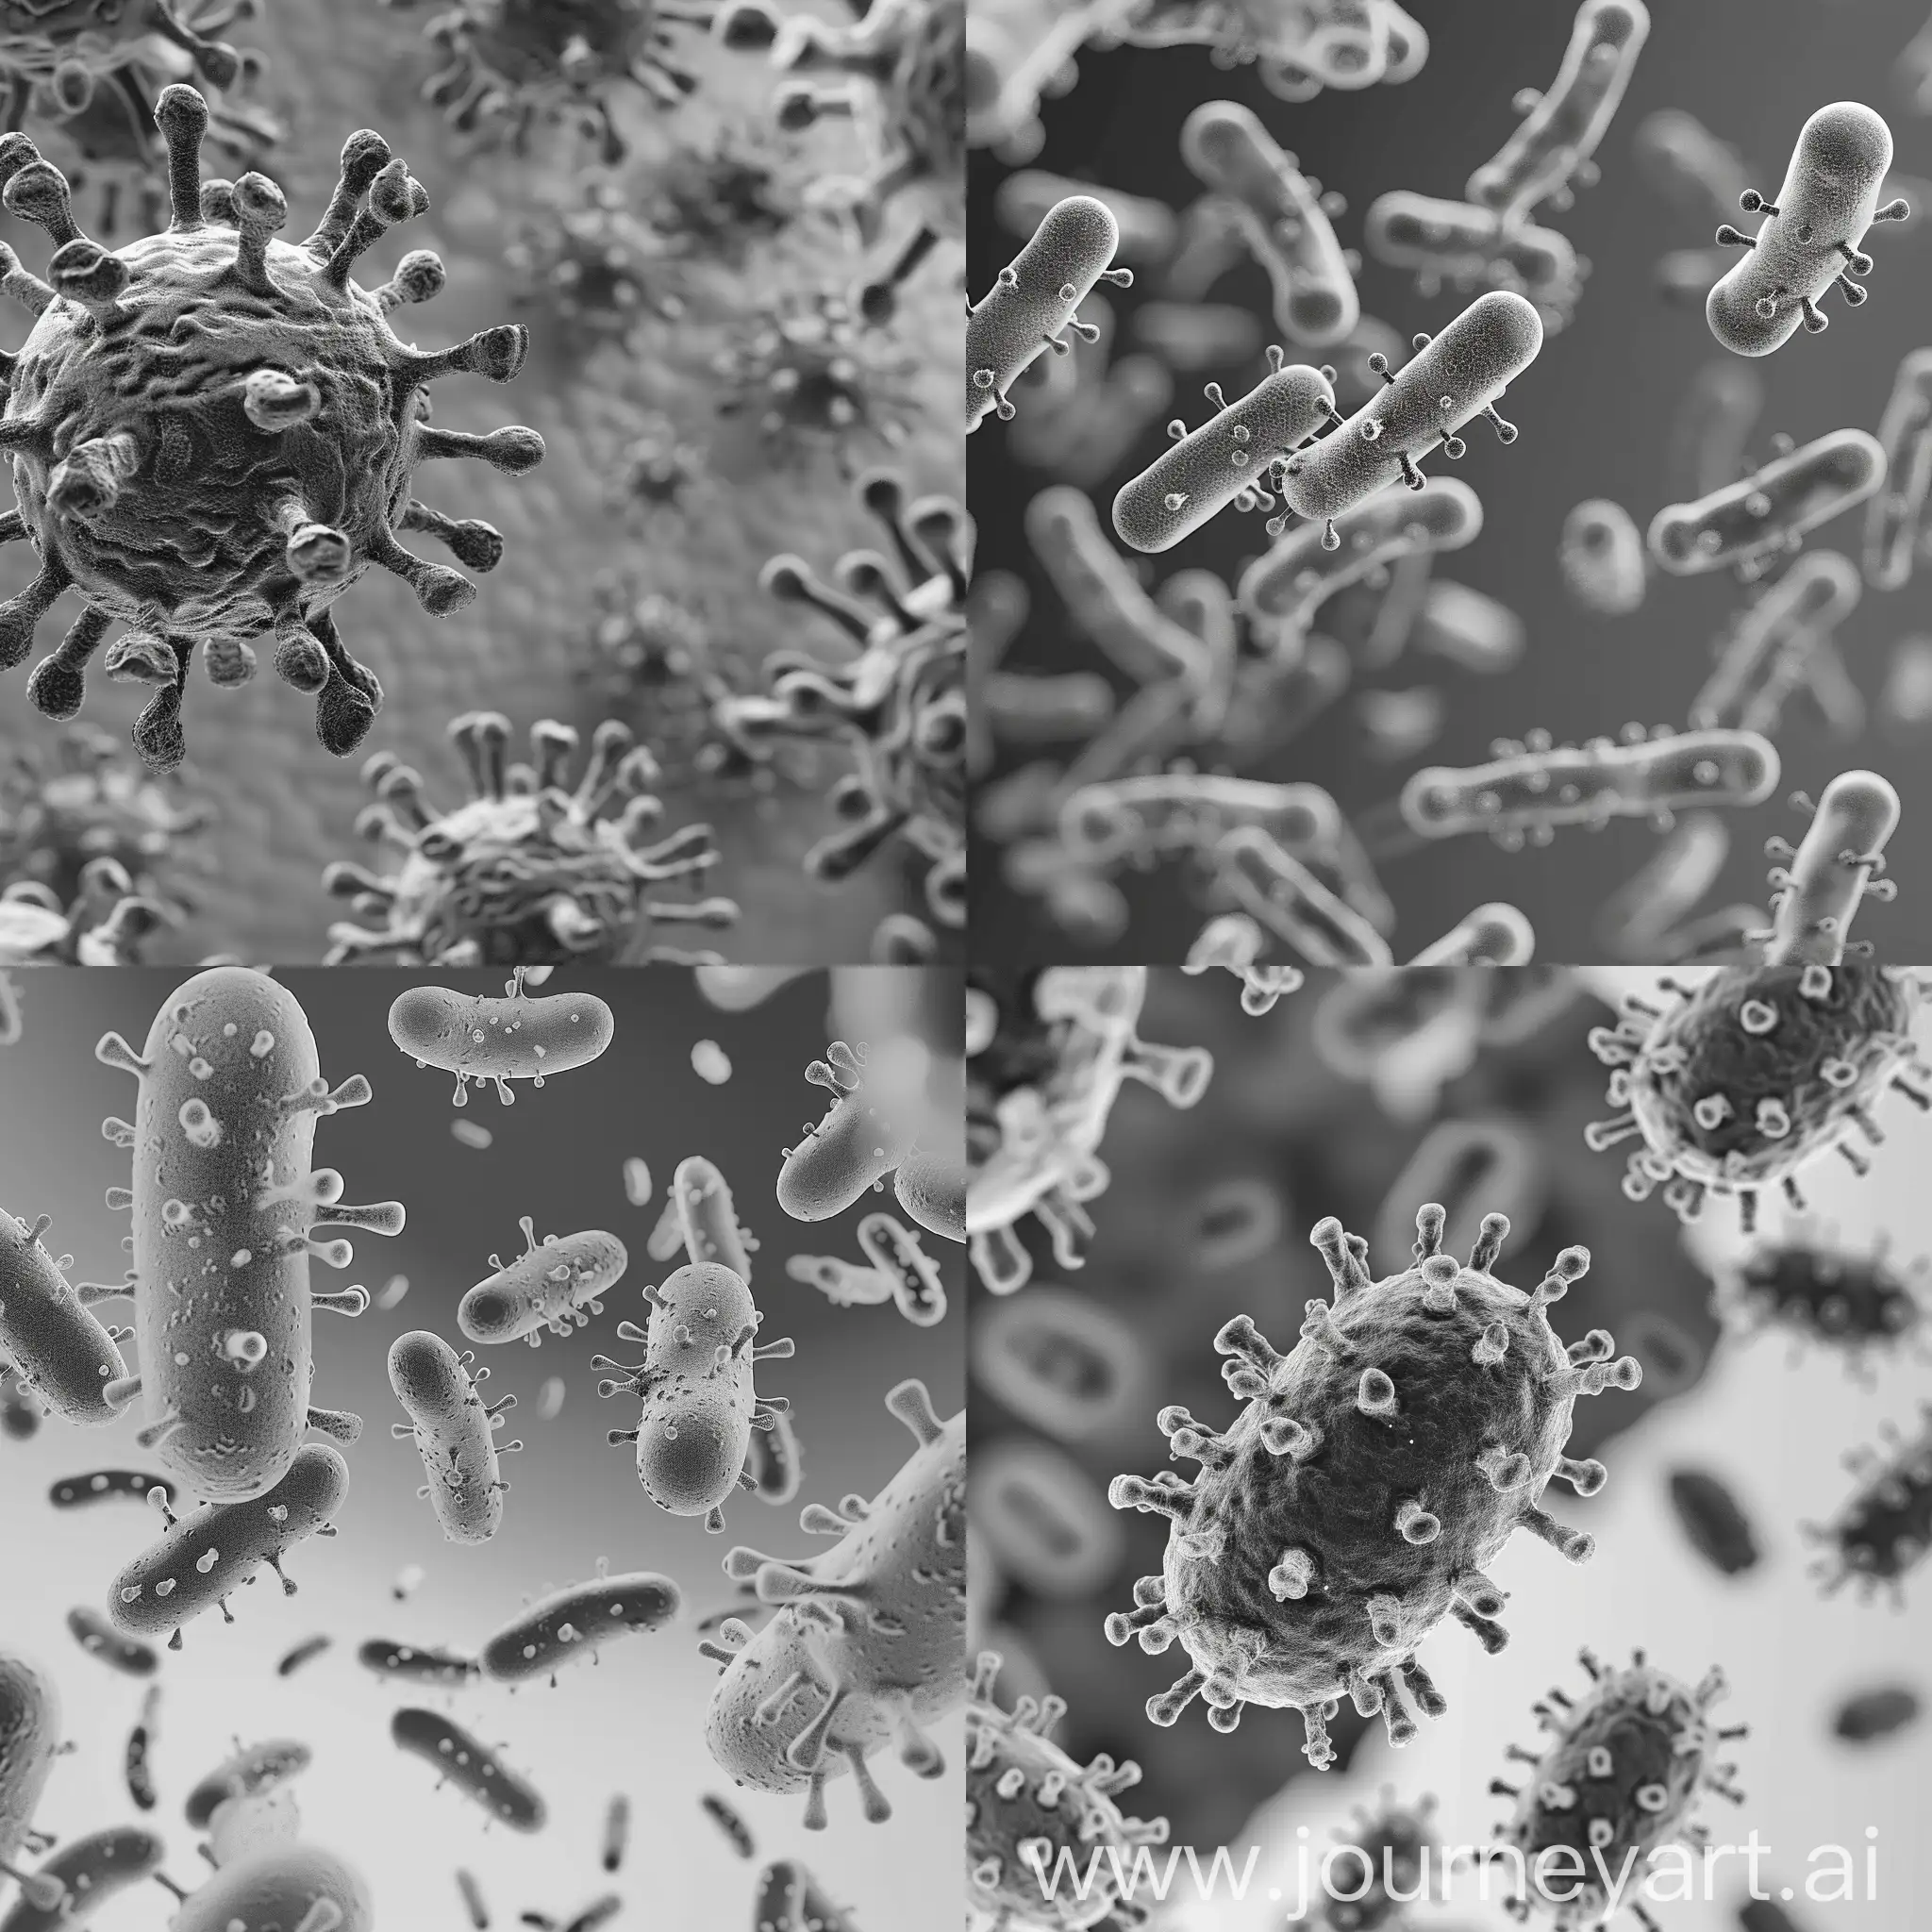 microbe 3d, black and white photo, gray uniform background